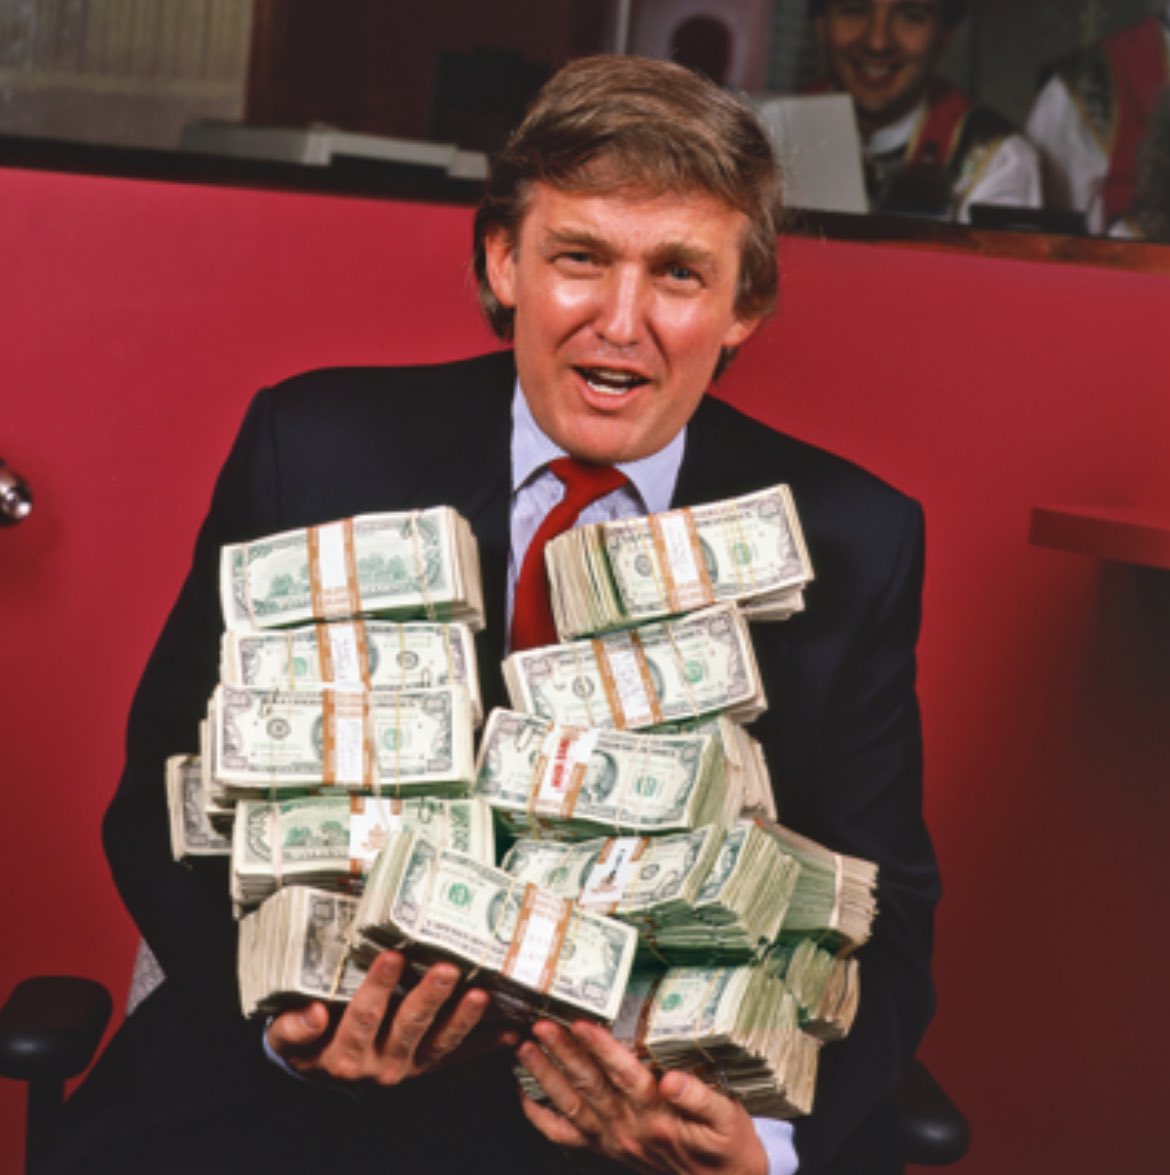 🚨BREAKING: Donald Trump set to receive $1.25 billion worth of Trump Media stock in DJT earnout bonus Watch liberals meltdown. 🤣